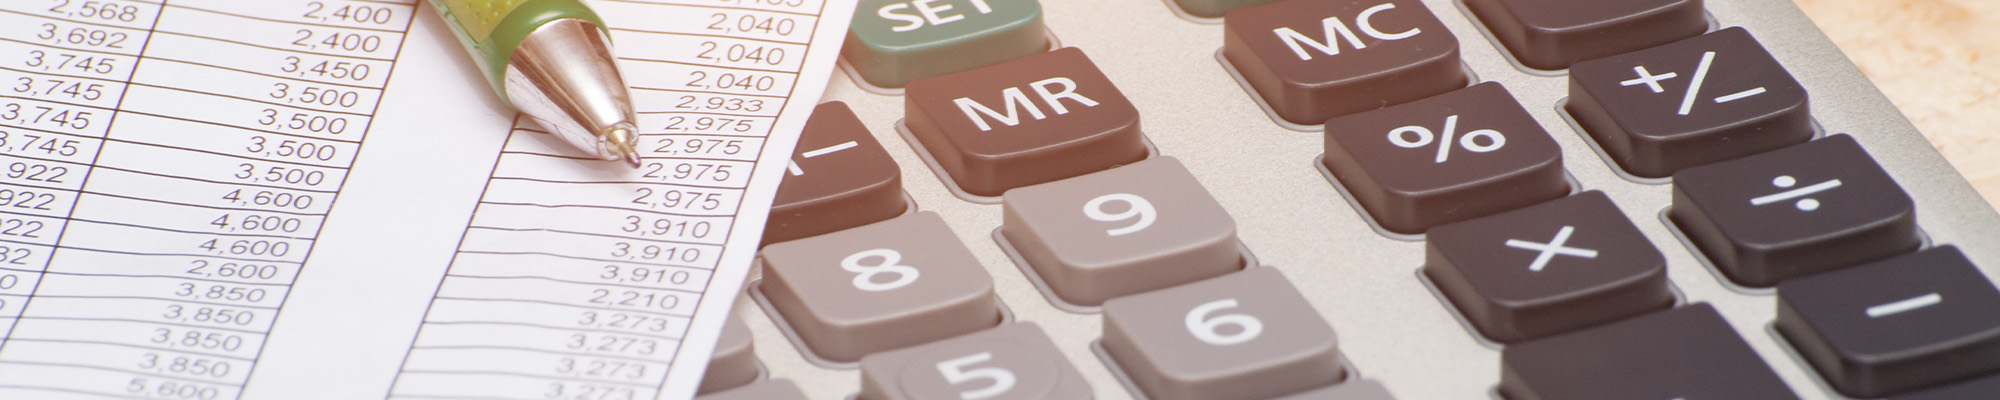 Stock photo of calculator, pen, and spreadsheet